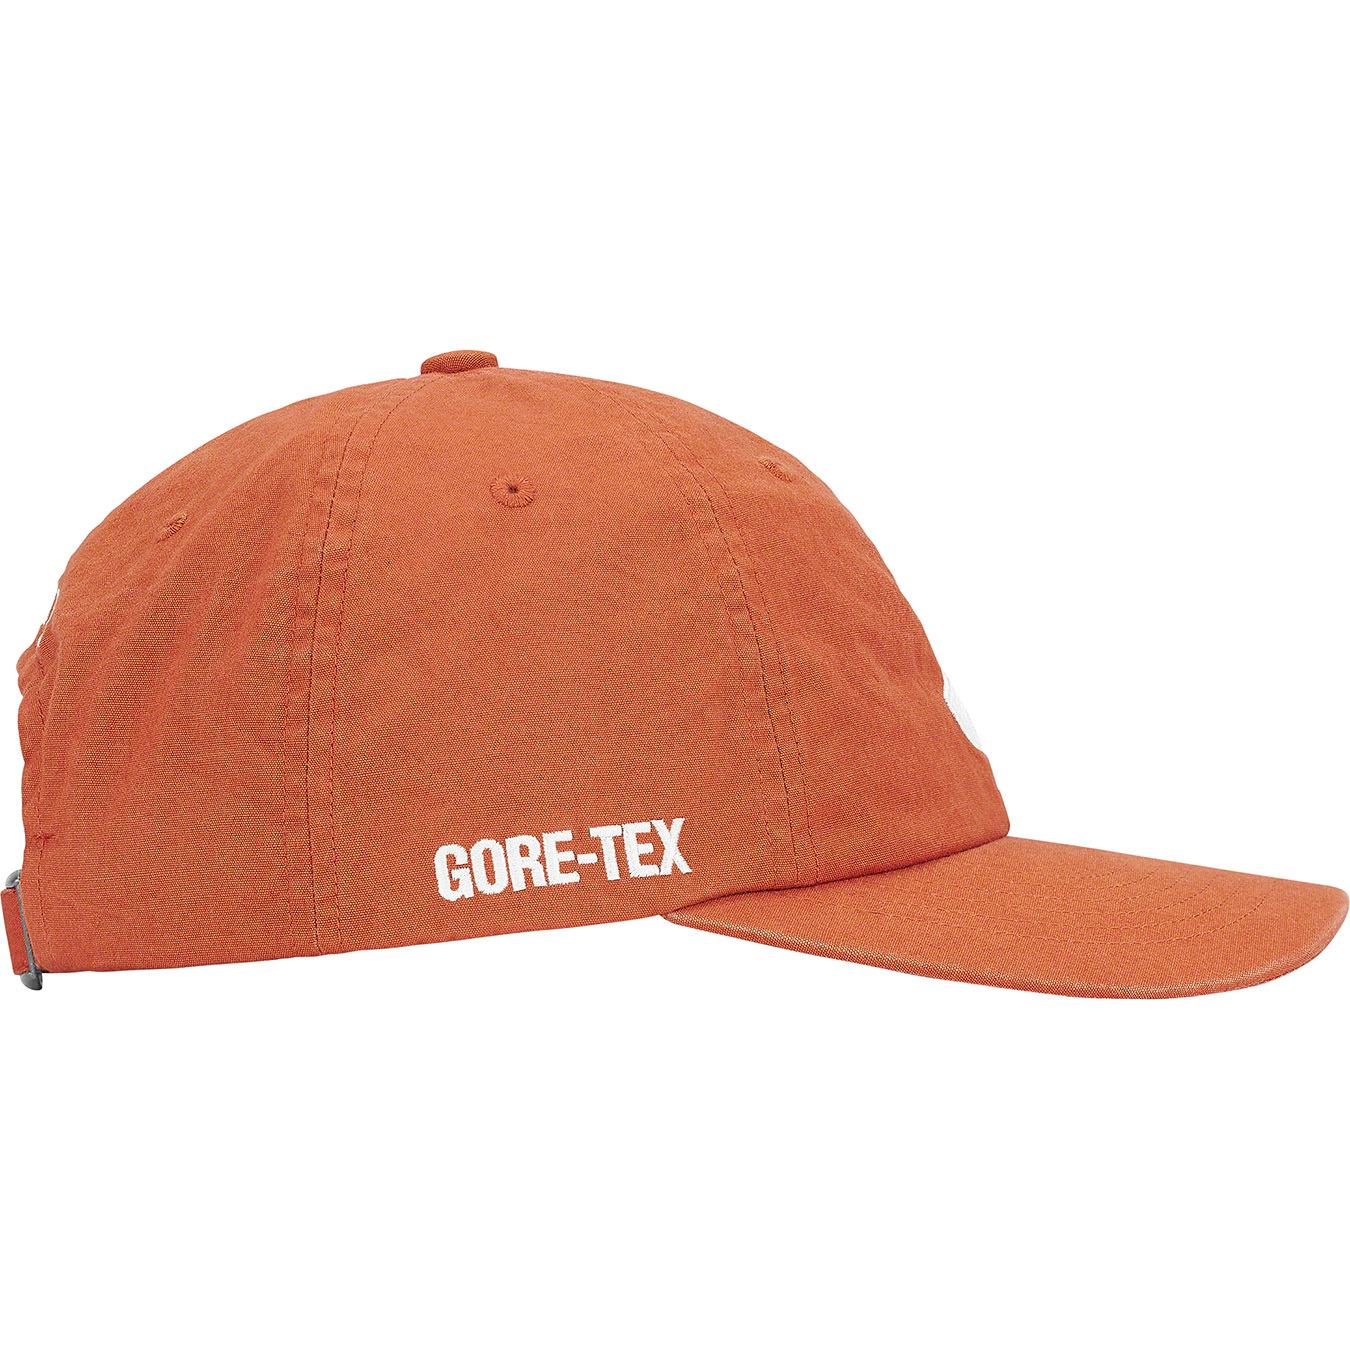 GORE-TEX S Logo 6-Panel | Supreme 20fw